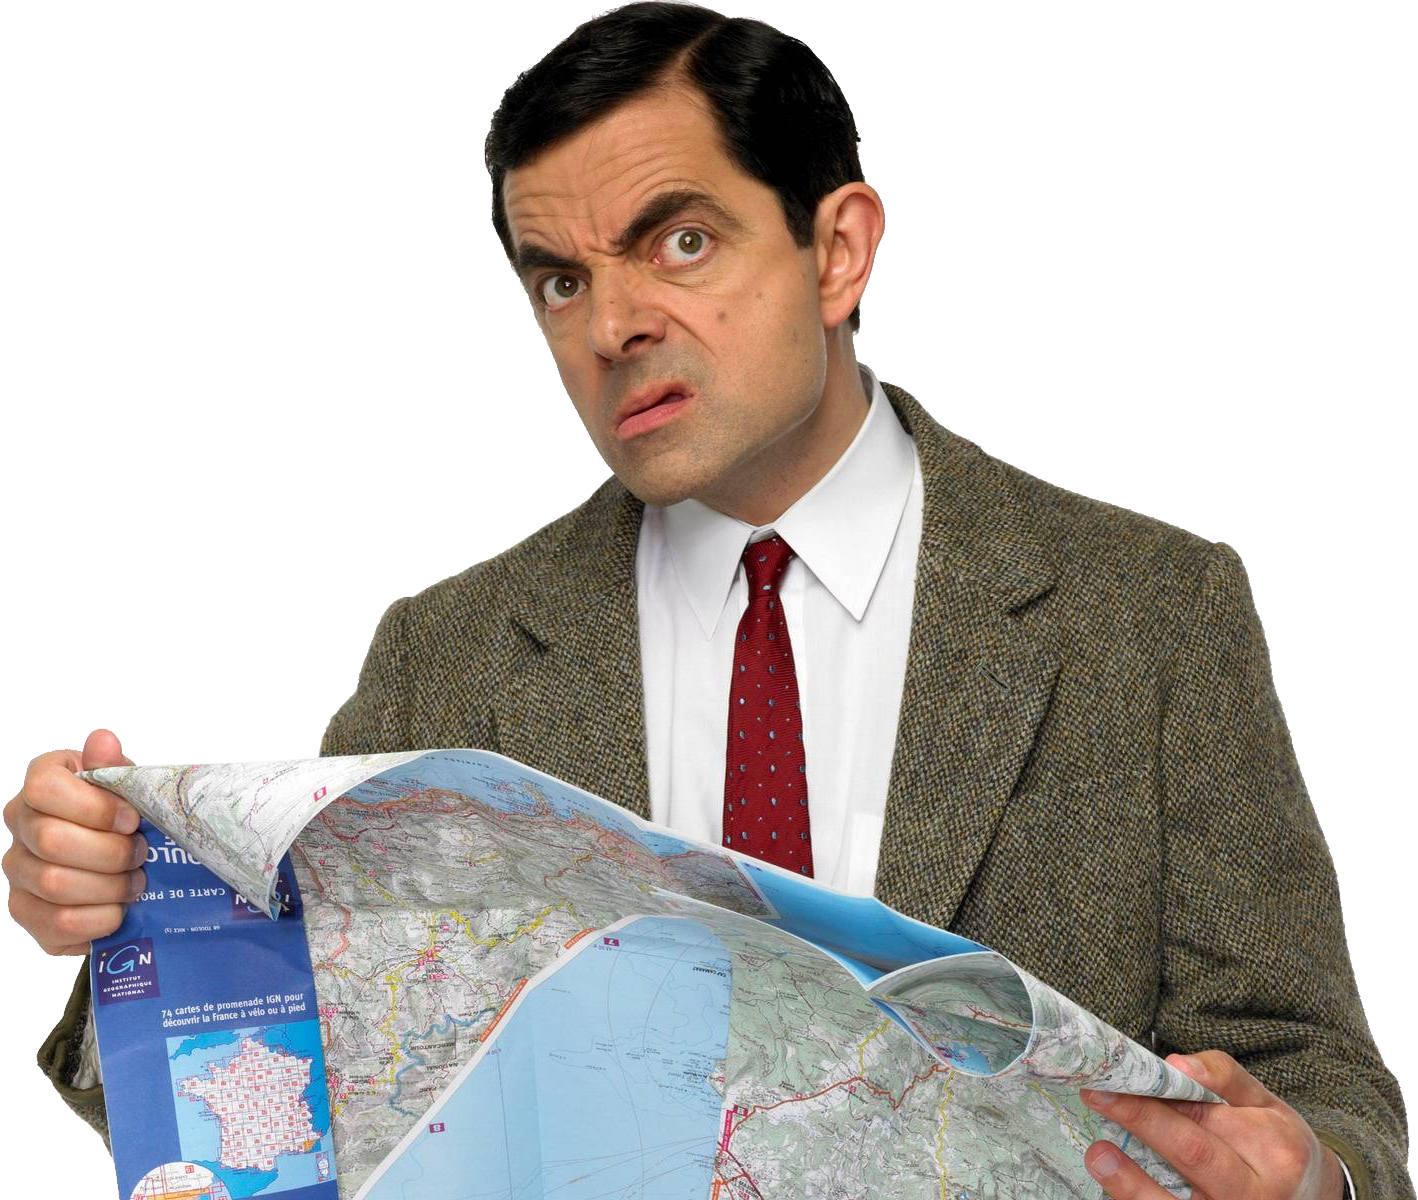 Mr. Bean | Rowan Atkinson PNG Image